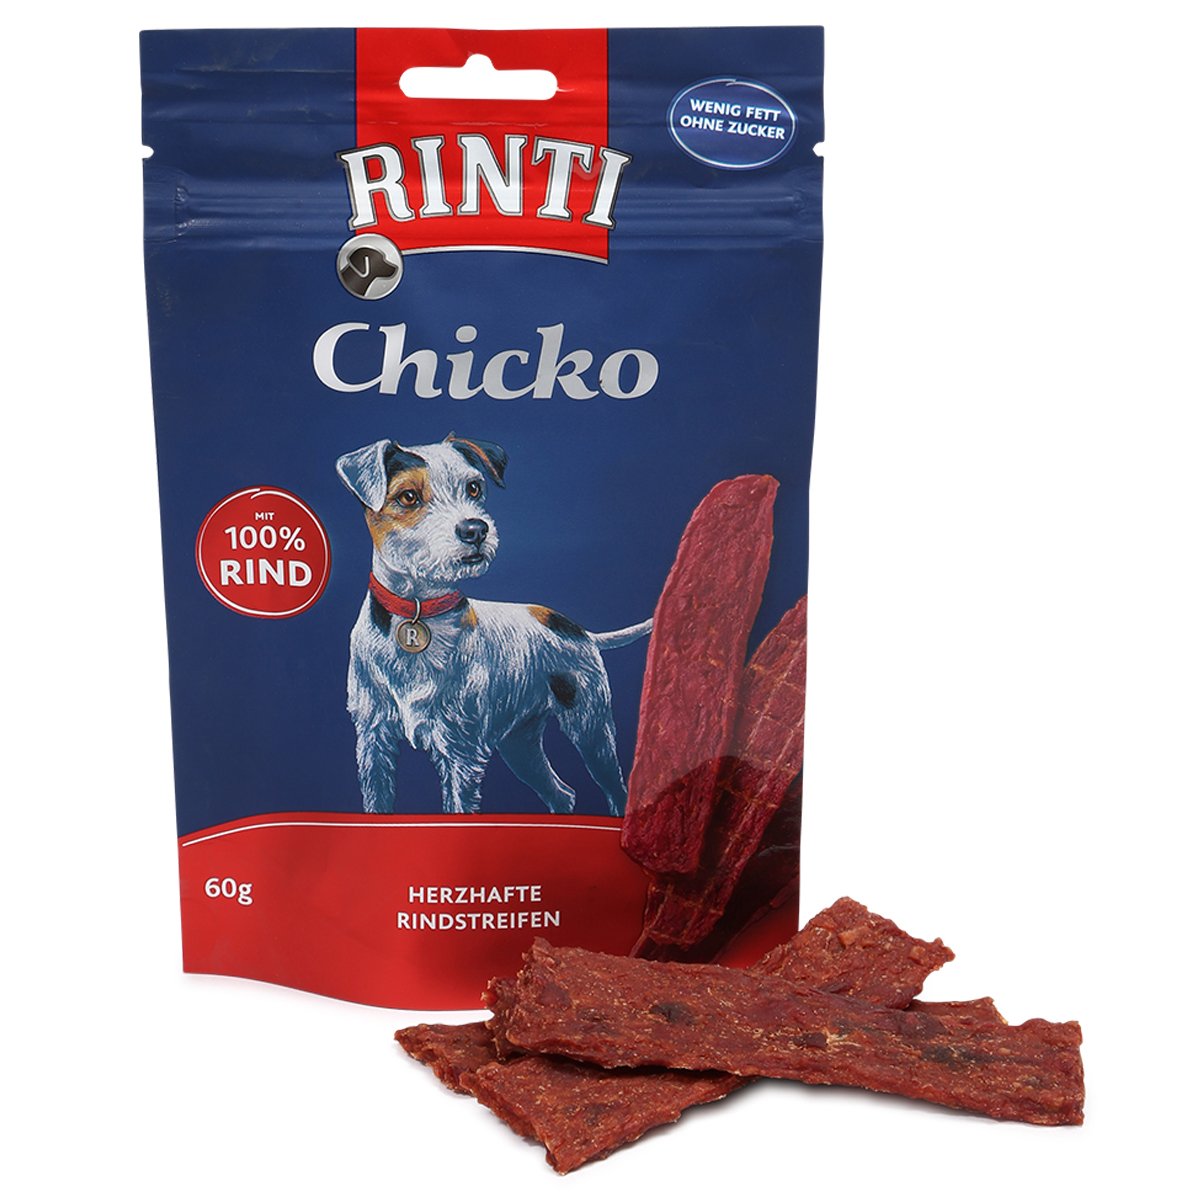 Rinti Extra Chicko Rind Hundesnack 6x60g